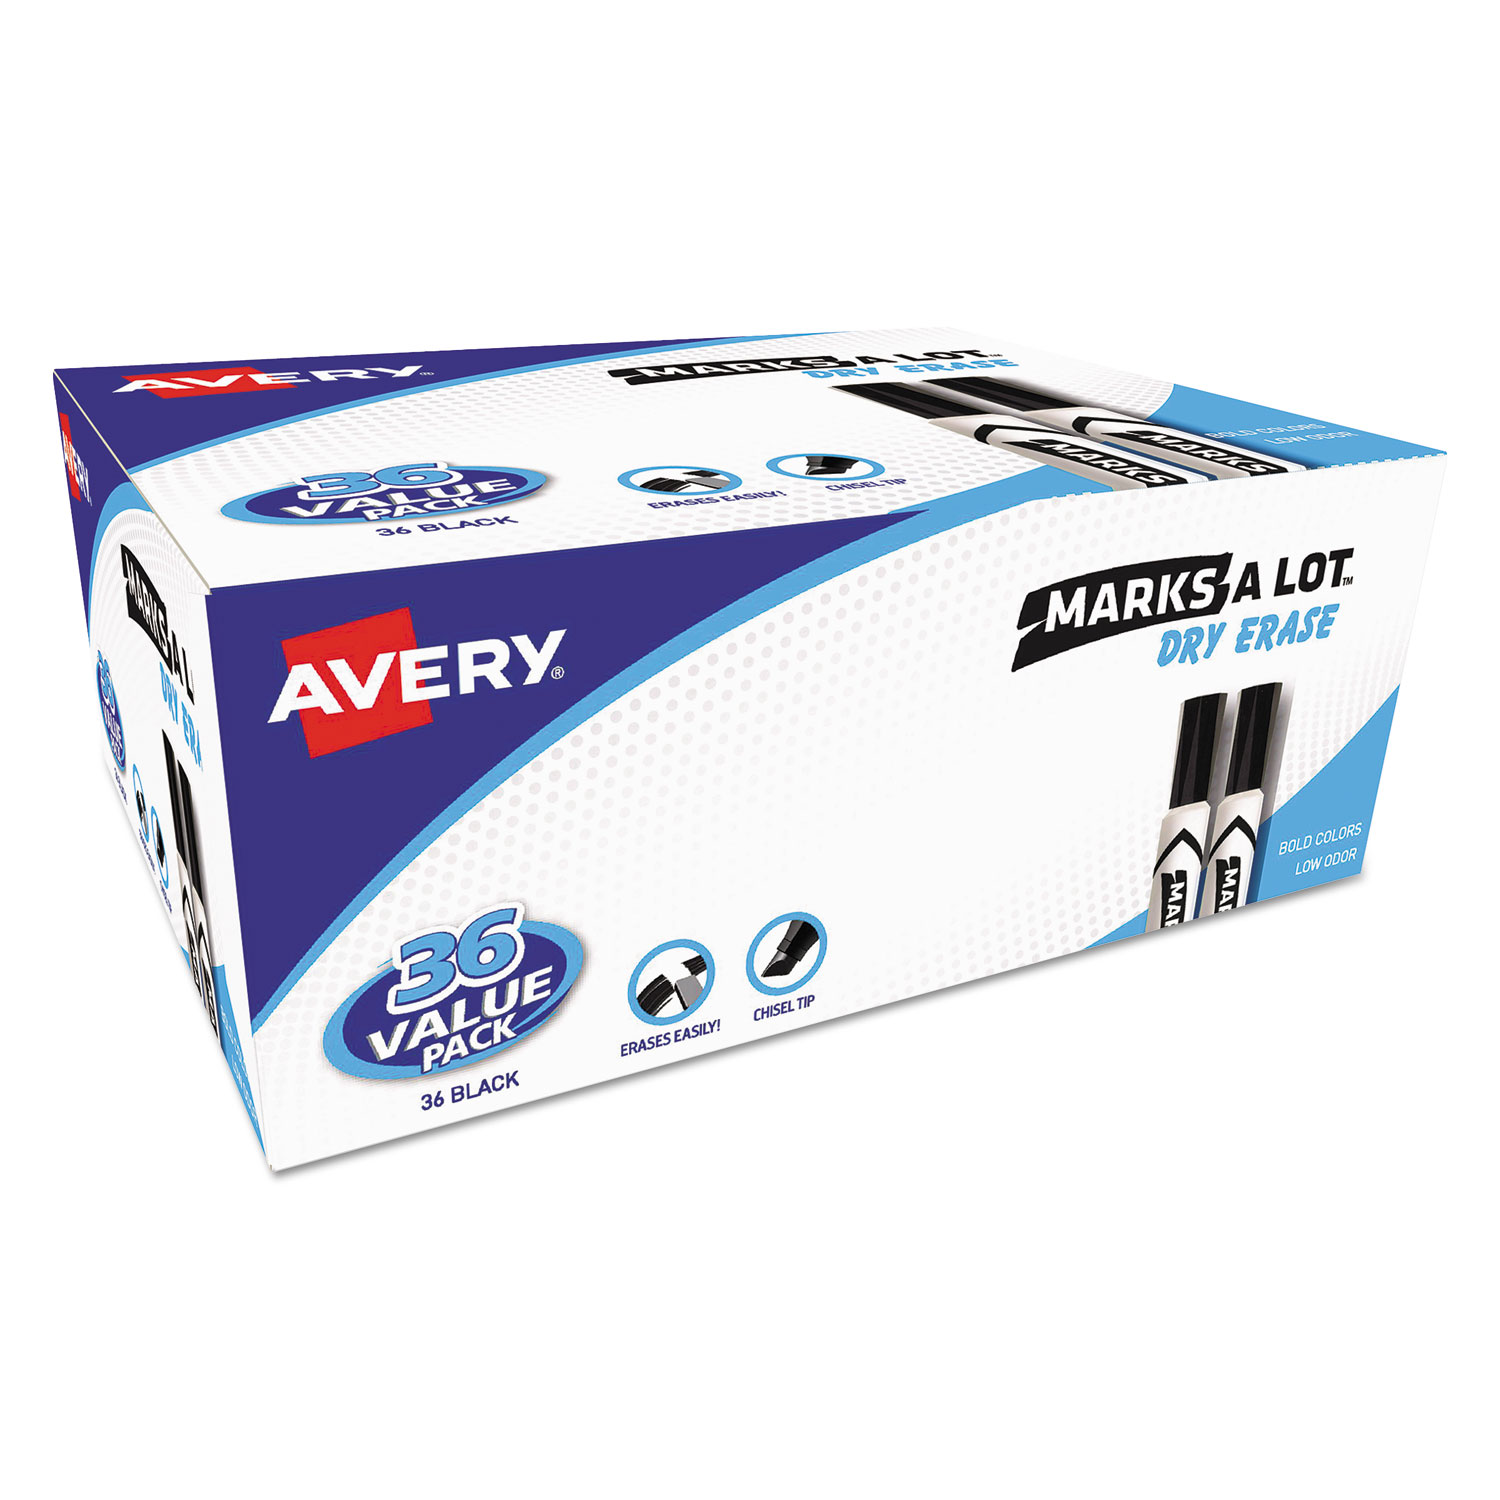  Avery 98207 MARKS A LOT Desk-Style Dry Erase Marker Value Pack, Broad Chisel Tip, Black, 36/Pack (AVE98207) 